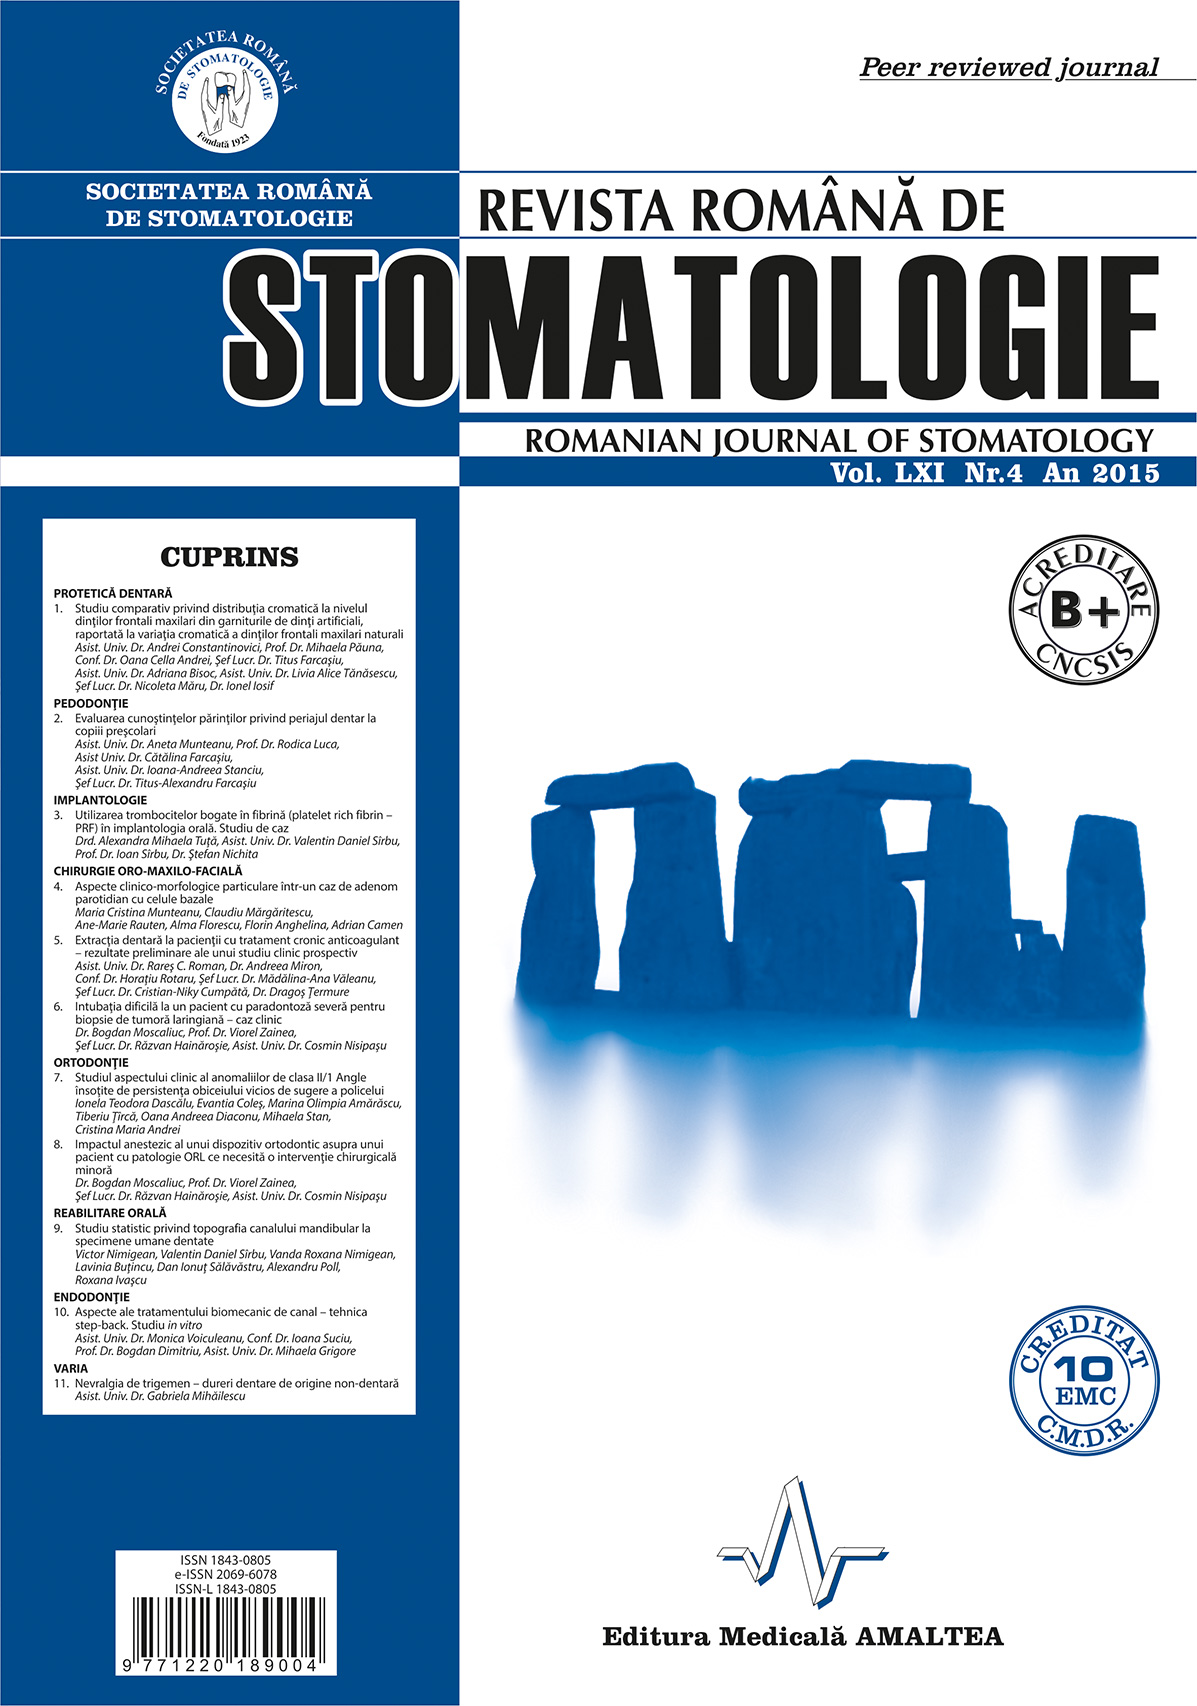 Revista Romana de STOMATOLOGIE - Romanian Journal of Stomatology, Vol. LXI, Nr. 4, An 2015